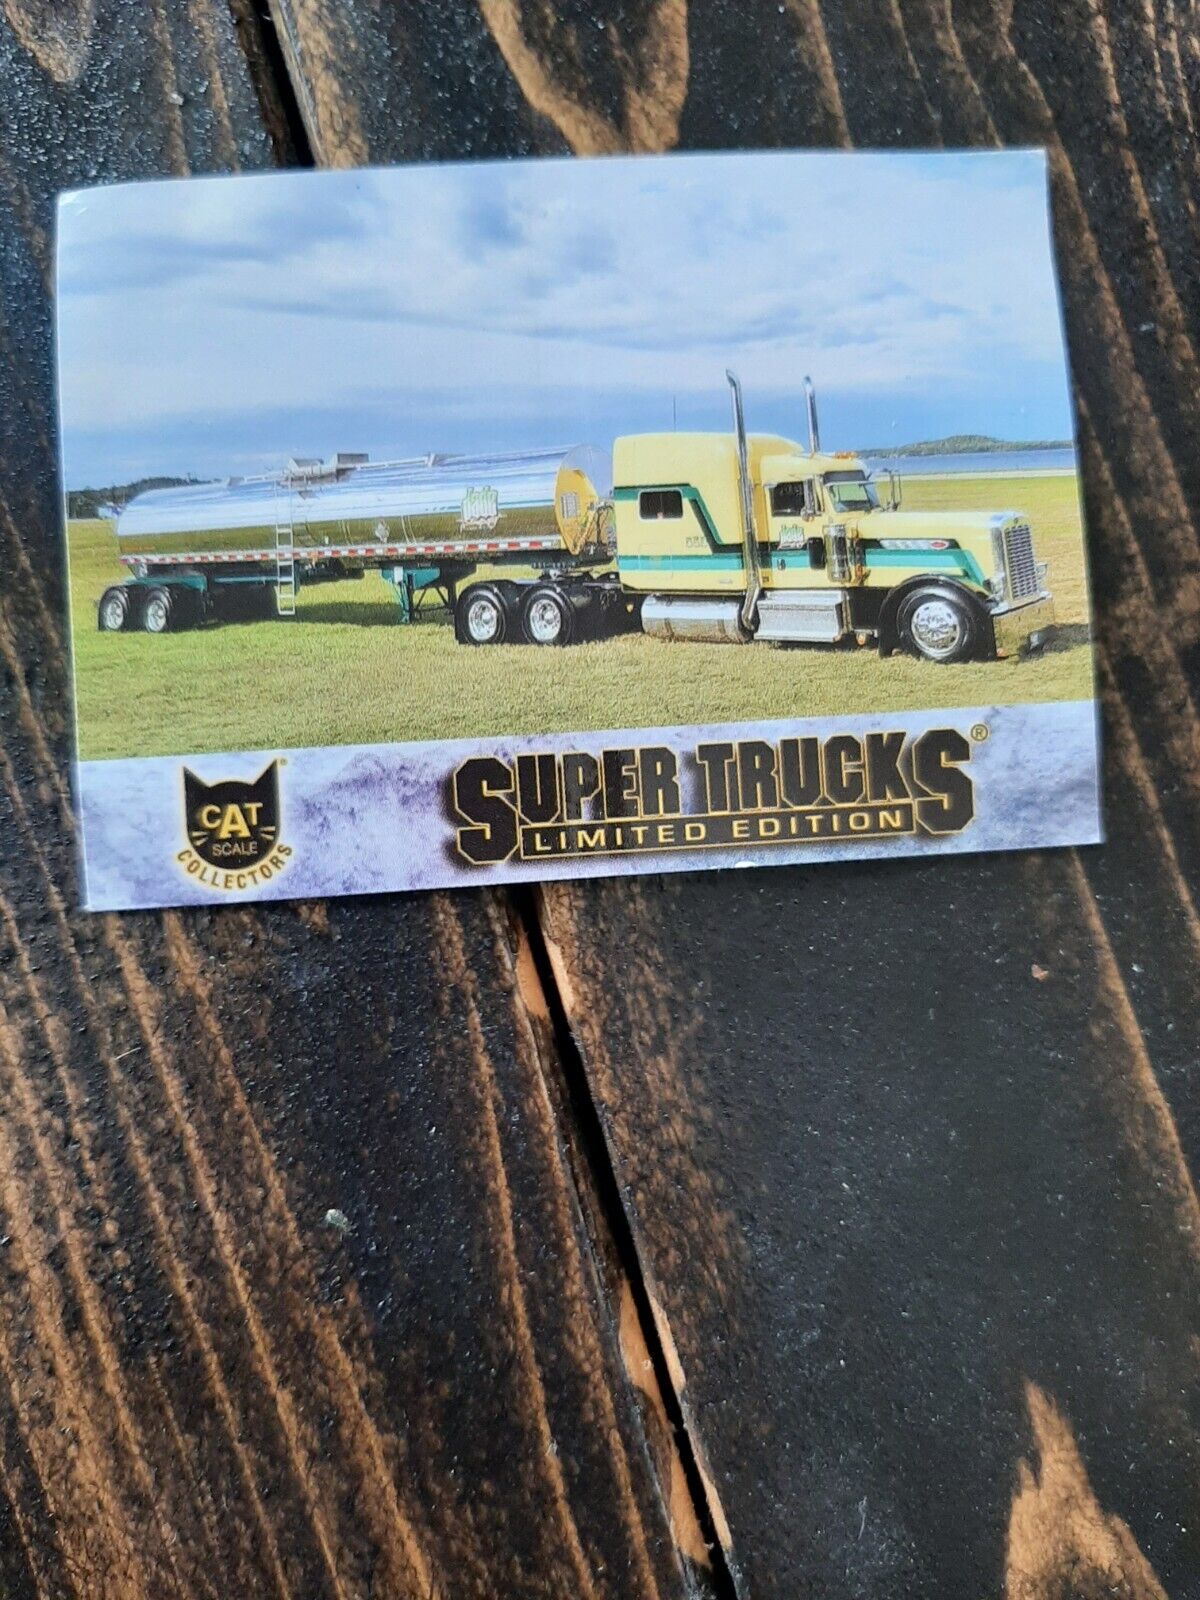 Super Trucks Linited Edition